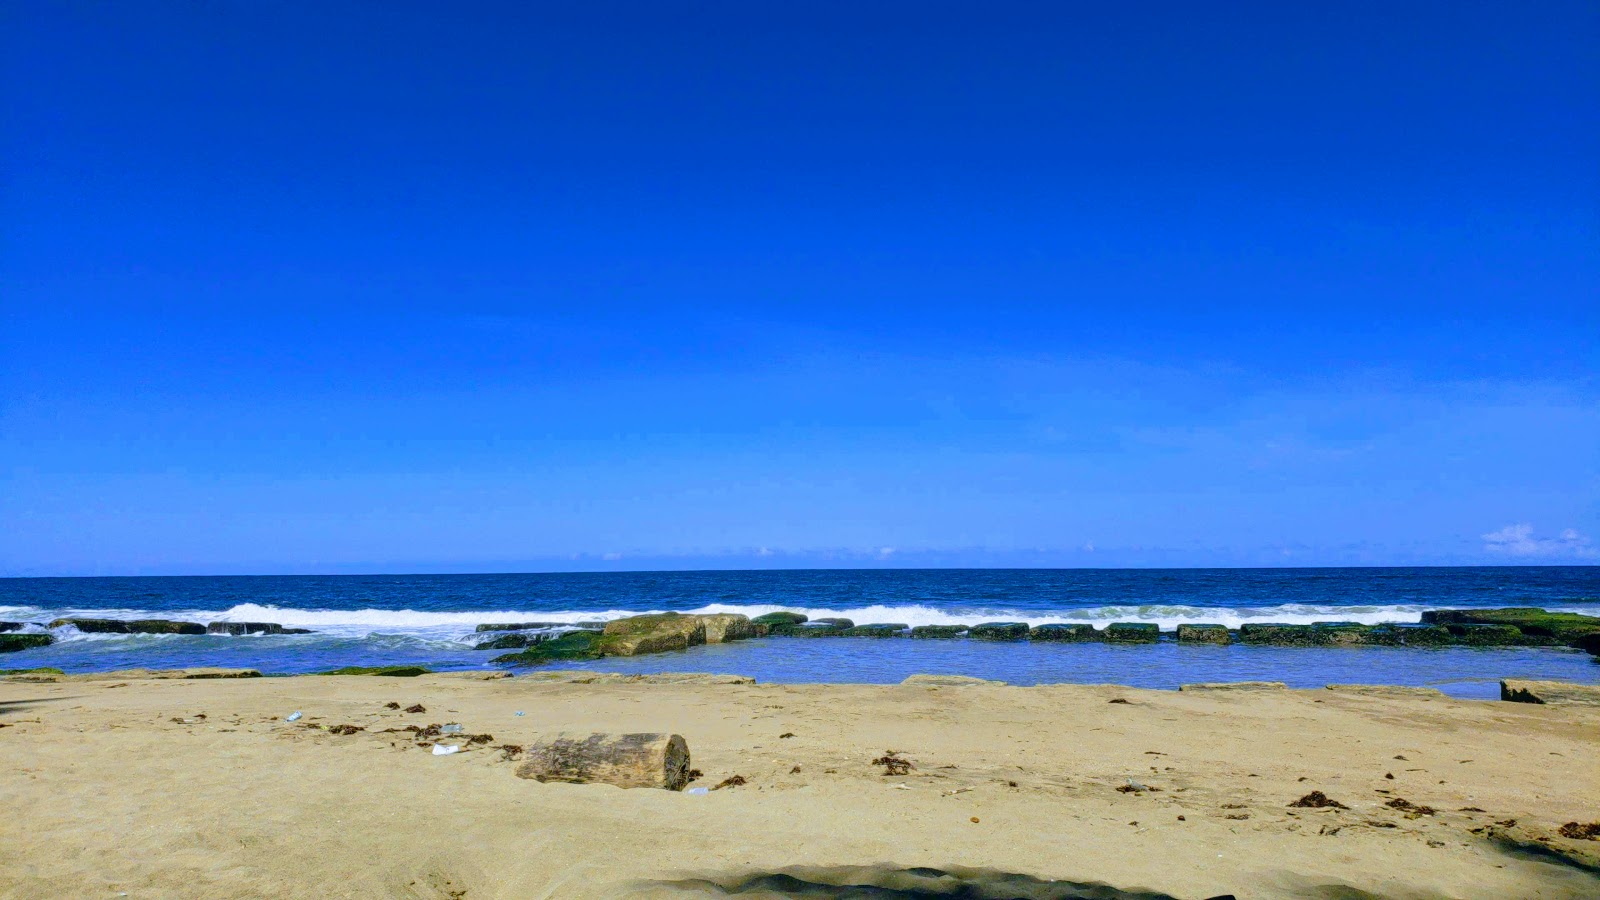 Foto de Playa La posita con playa amplia